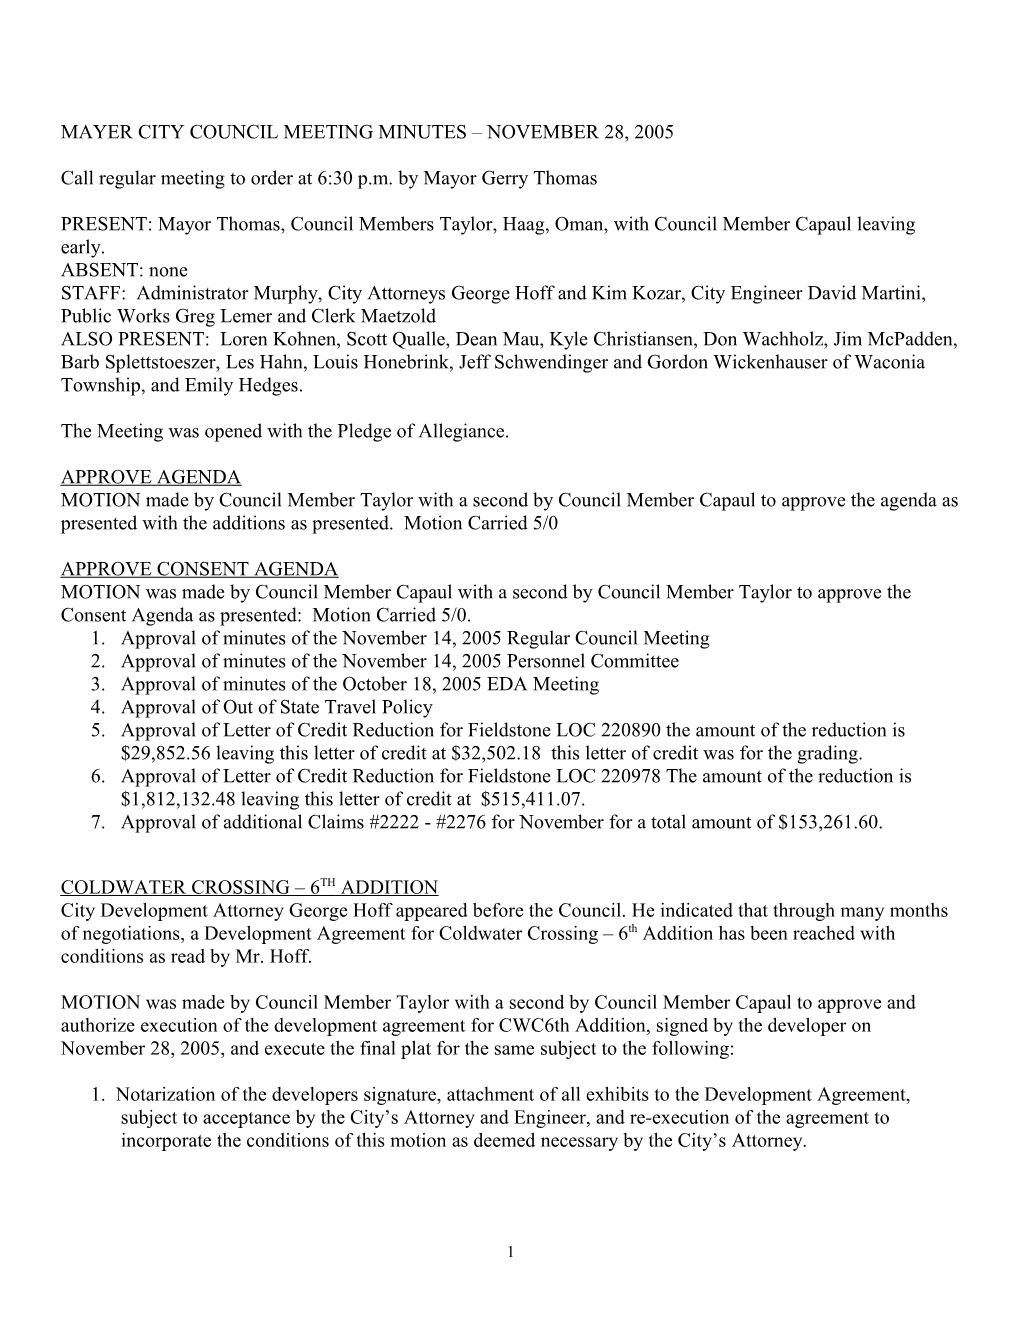 Mayer City Council Meeting Minutes - June 28, 1999 s1